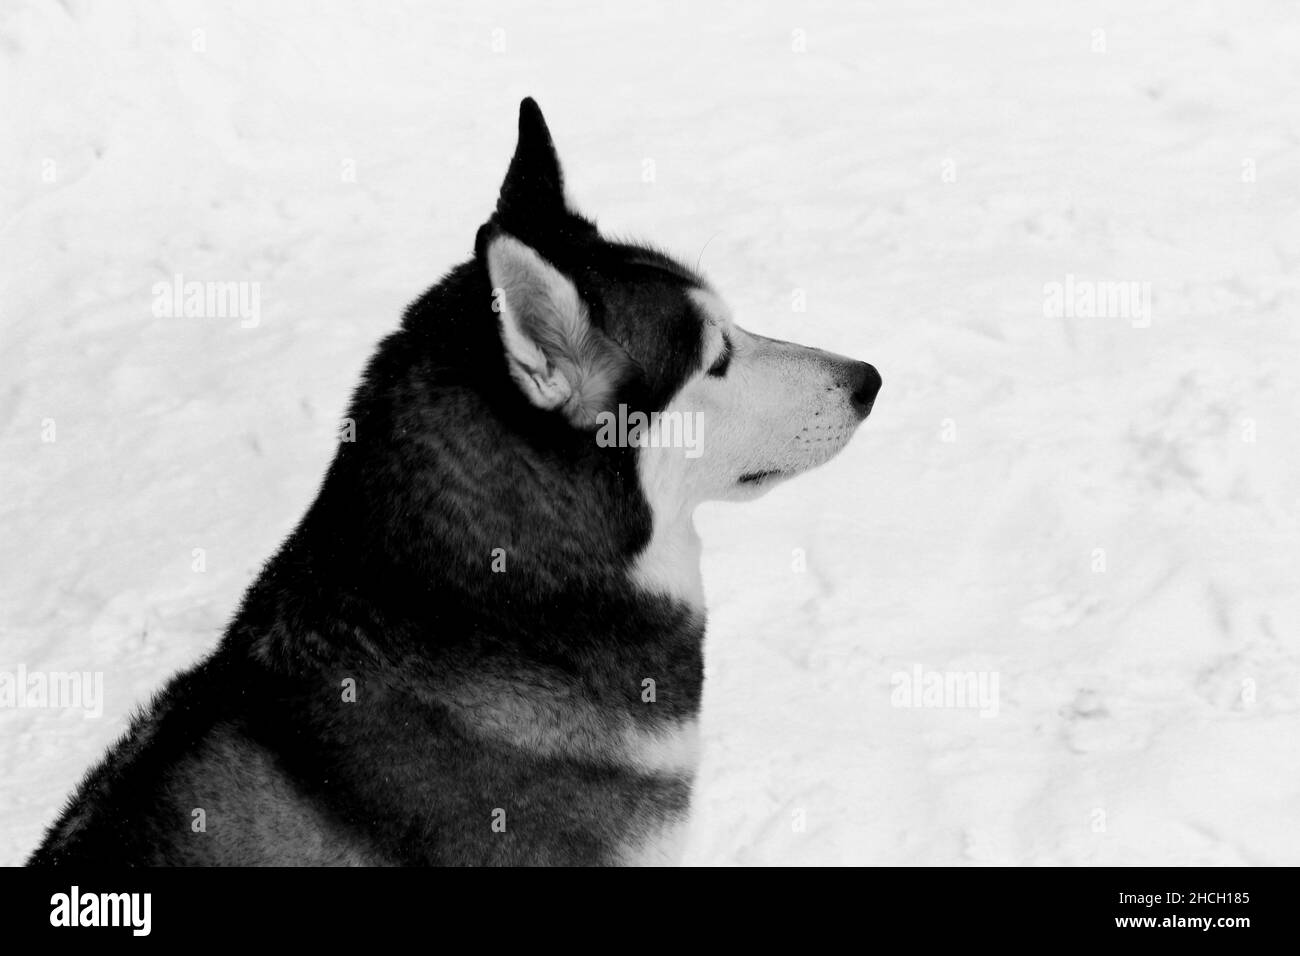 Siberian Husky dog portrait outdoor in winter Stock Photo